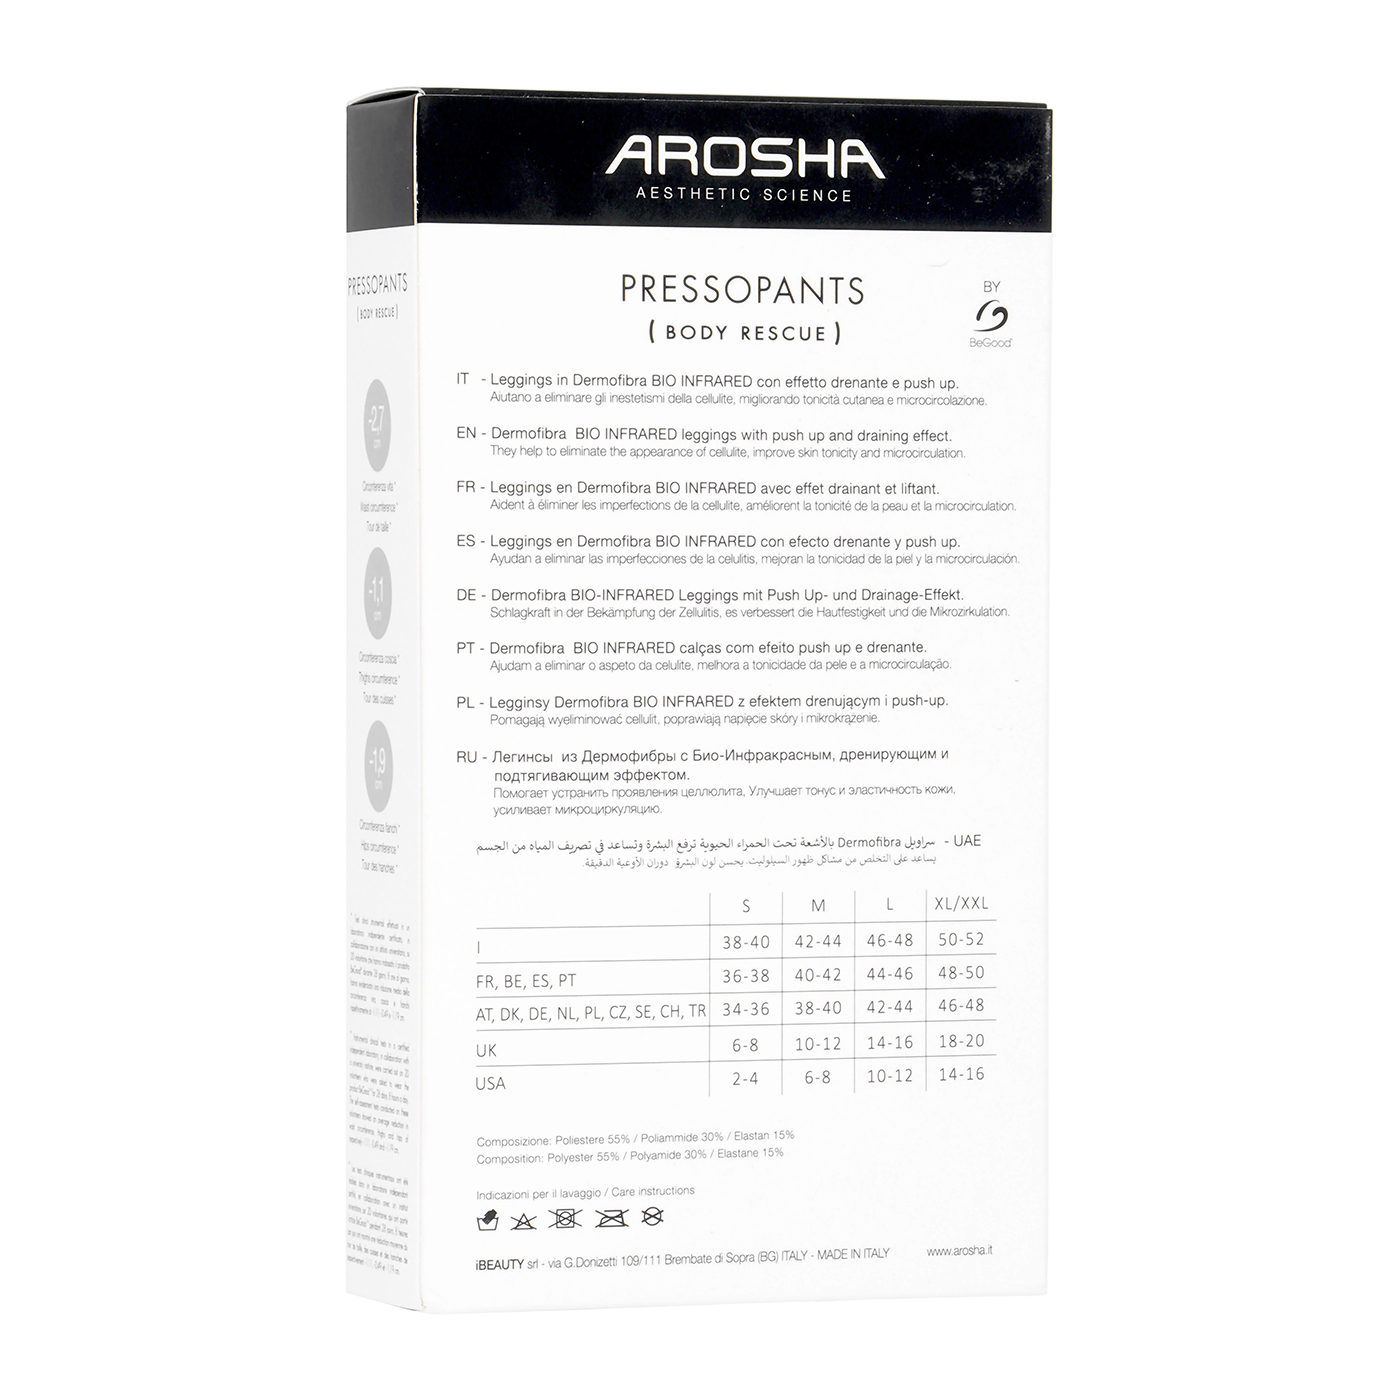 Arosha Body Rescue PRESSOPANTS – Size L - Opulence Glamour Skin